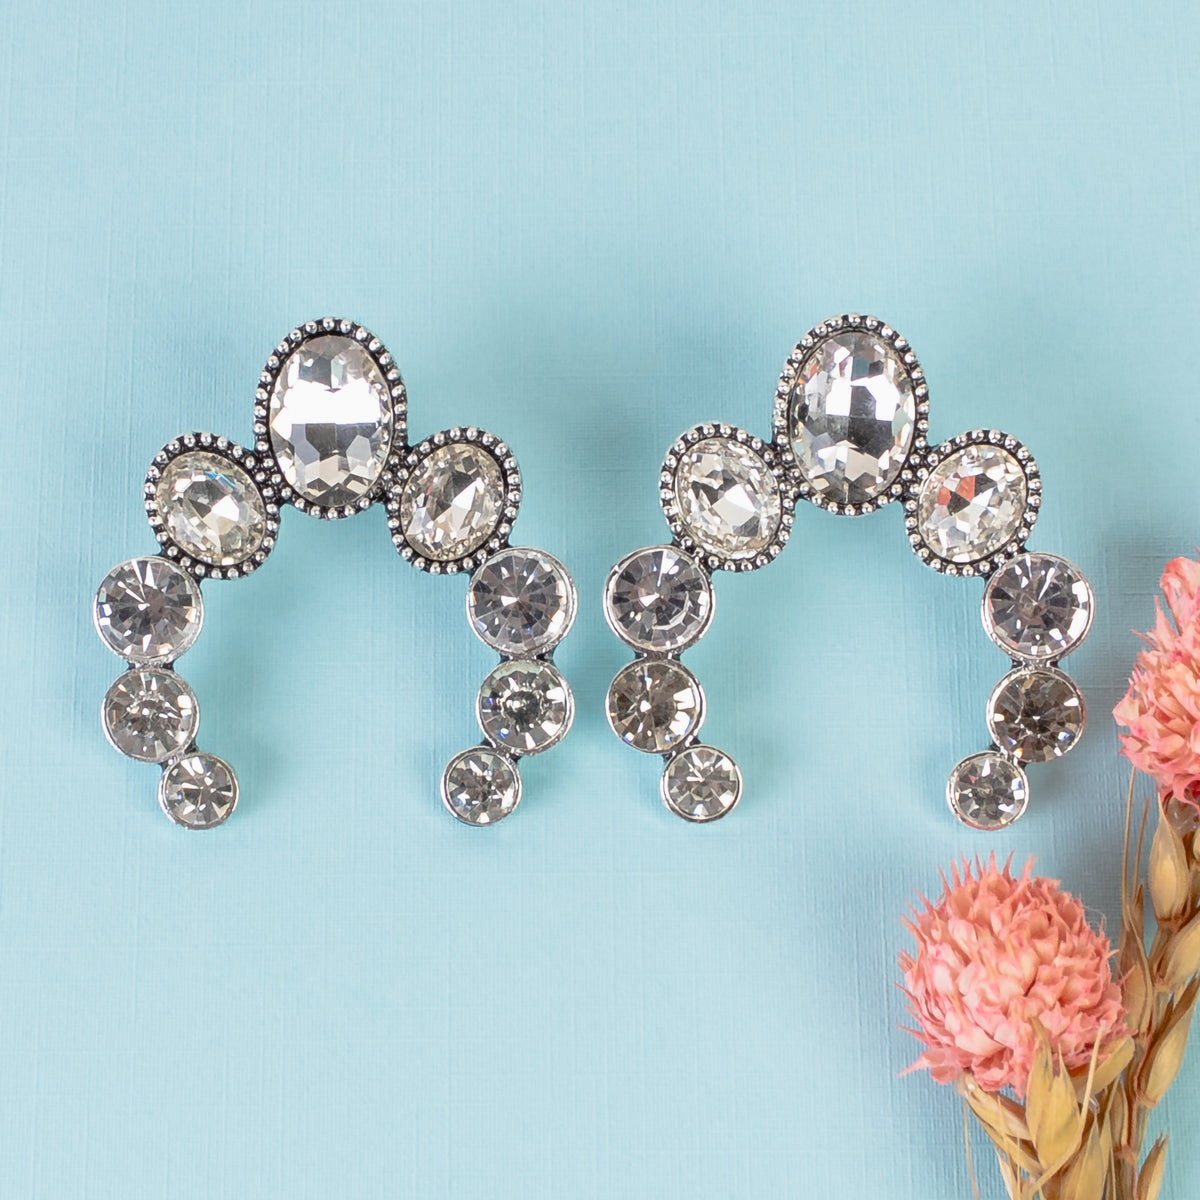 93177 - Crystal Squash Blossom Earrings - Silver & White